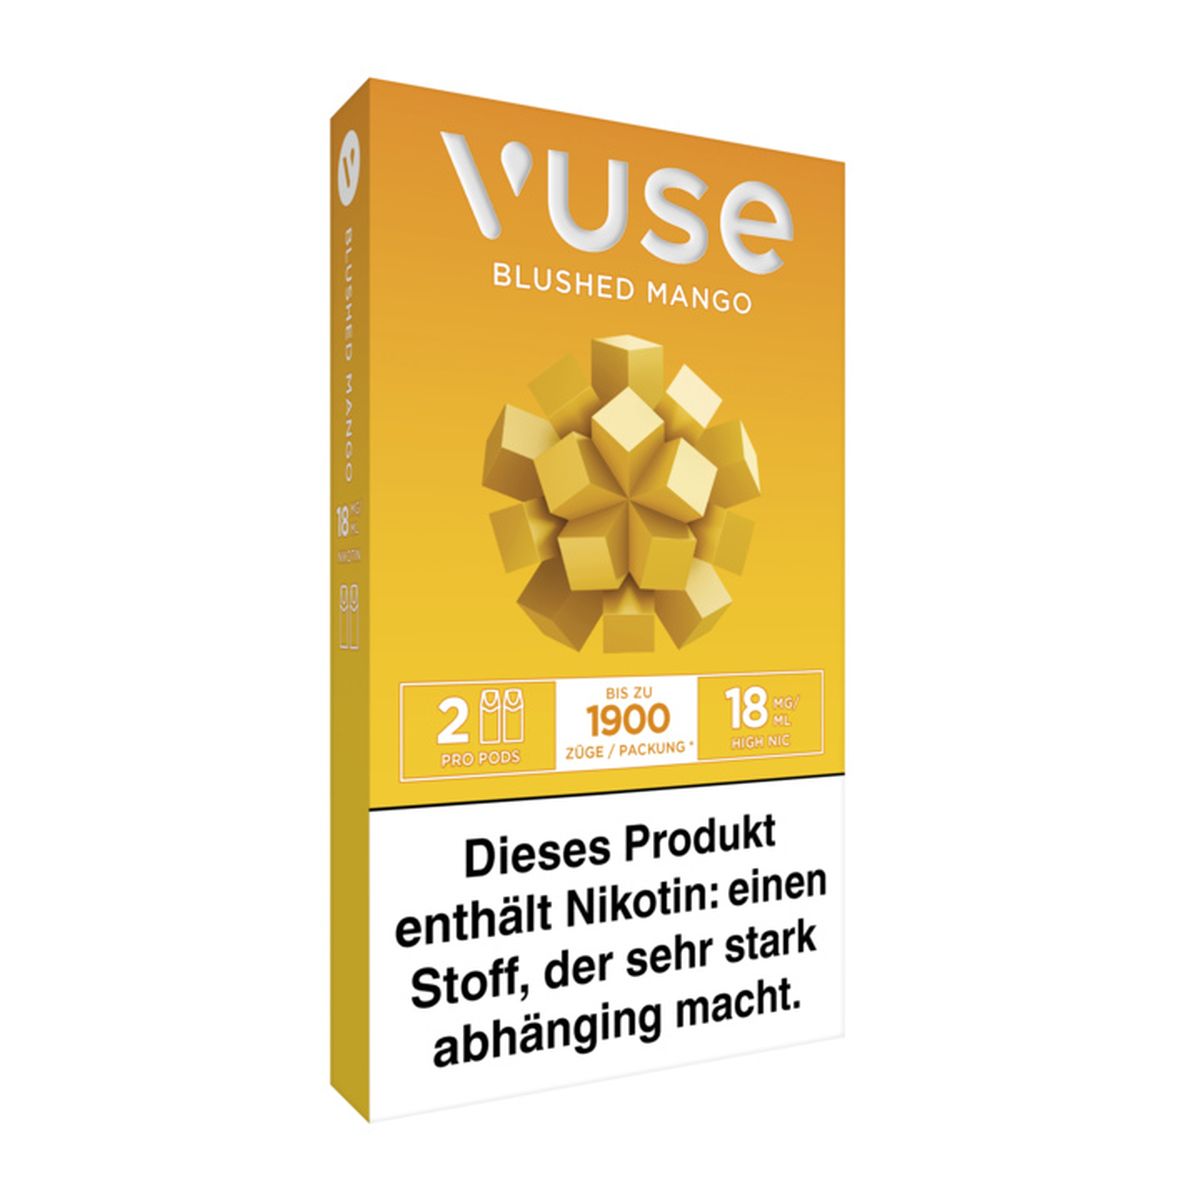 Vuse Vuse ePod (Pro Caps) Blushed Mango Nic Salts 18mg Nikotin 1,9ml bei www.Tabakring.de kaufen